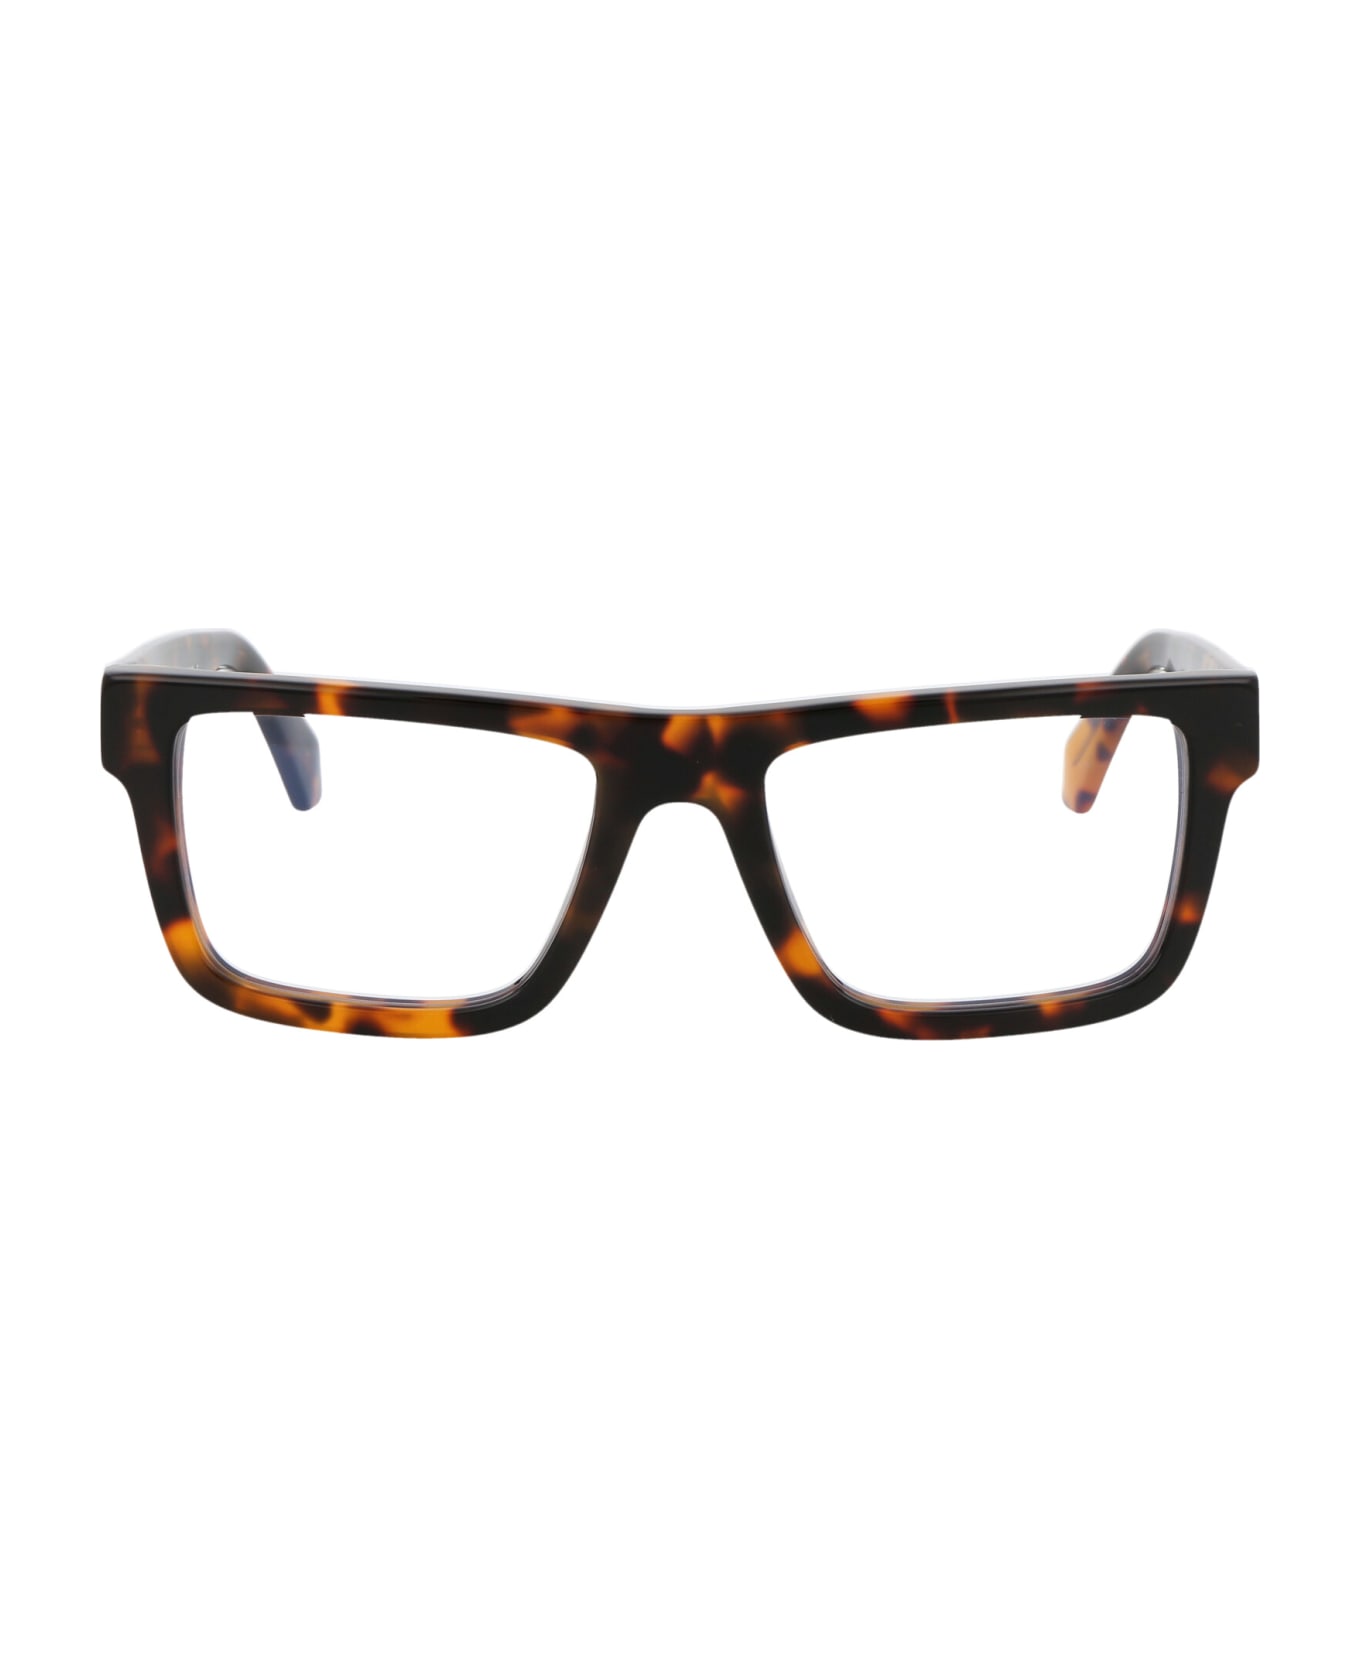 Off-White Optical Style 25 Glasses - 6000 HAVANA BLUE BLOCK アイウェア